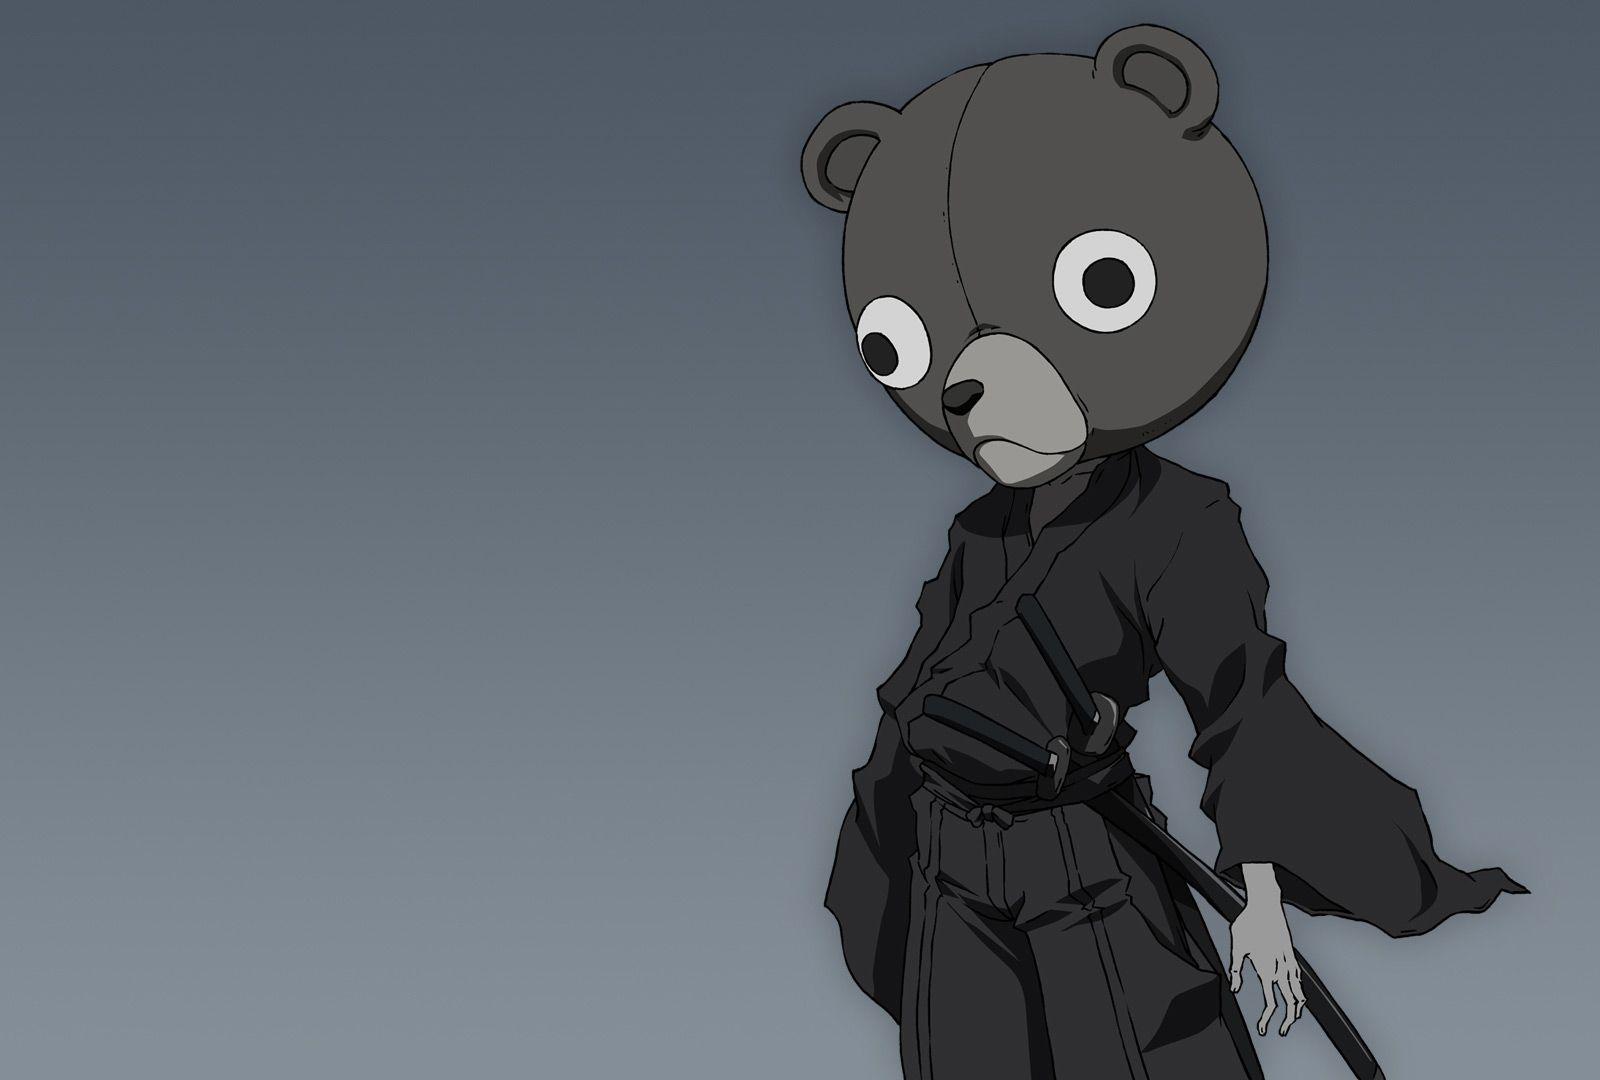 afro samurai kuma -I can never look at teddy bears in the same way